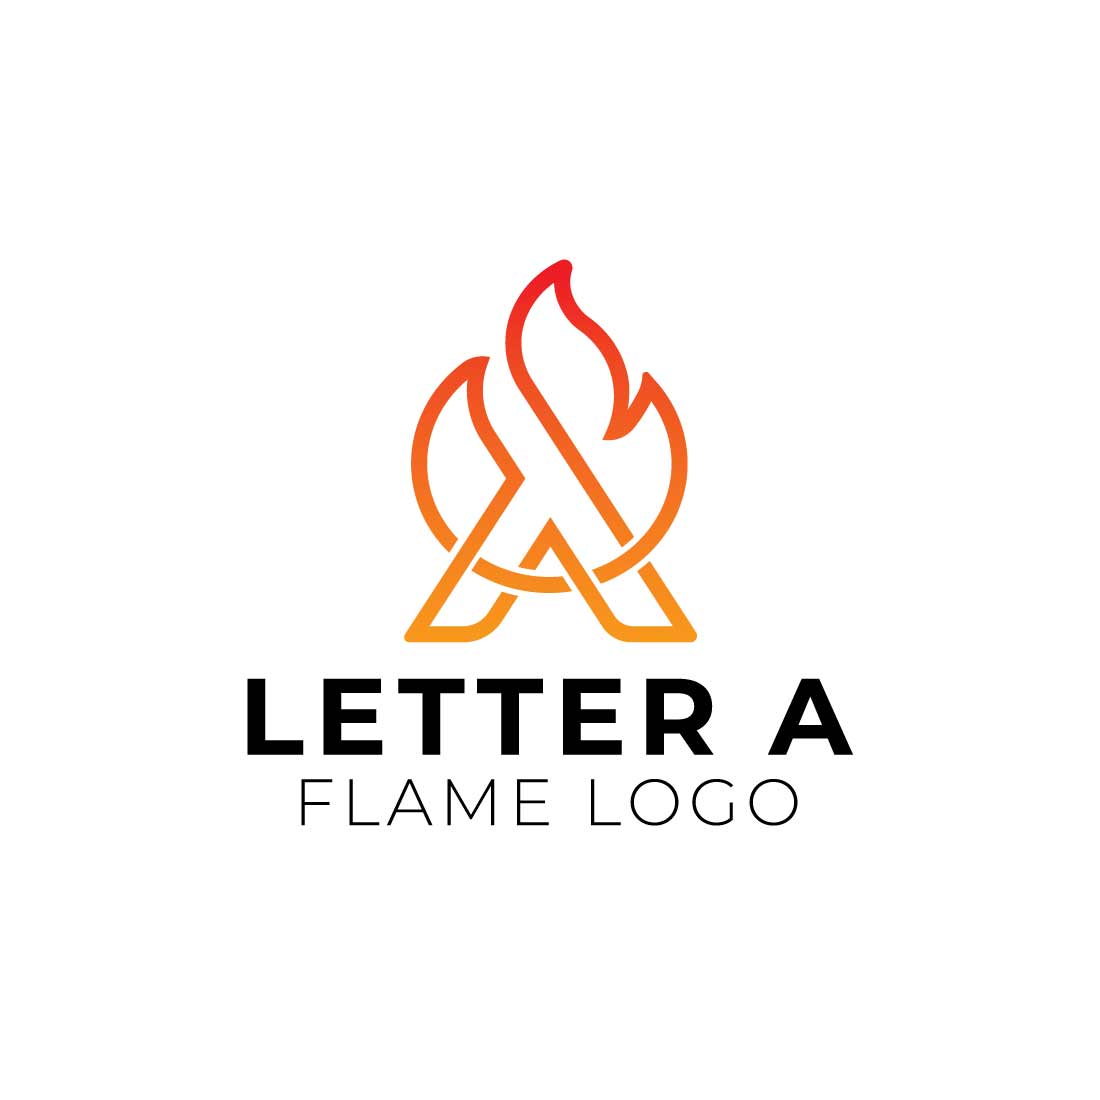 Elegant Letter A Flame Logo preview image.